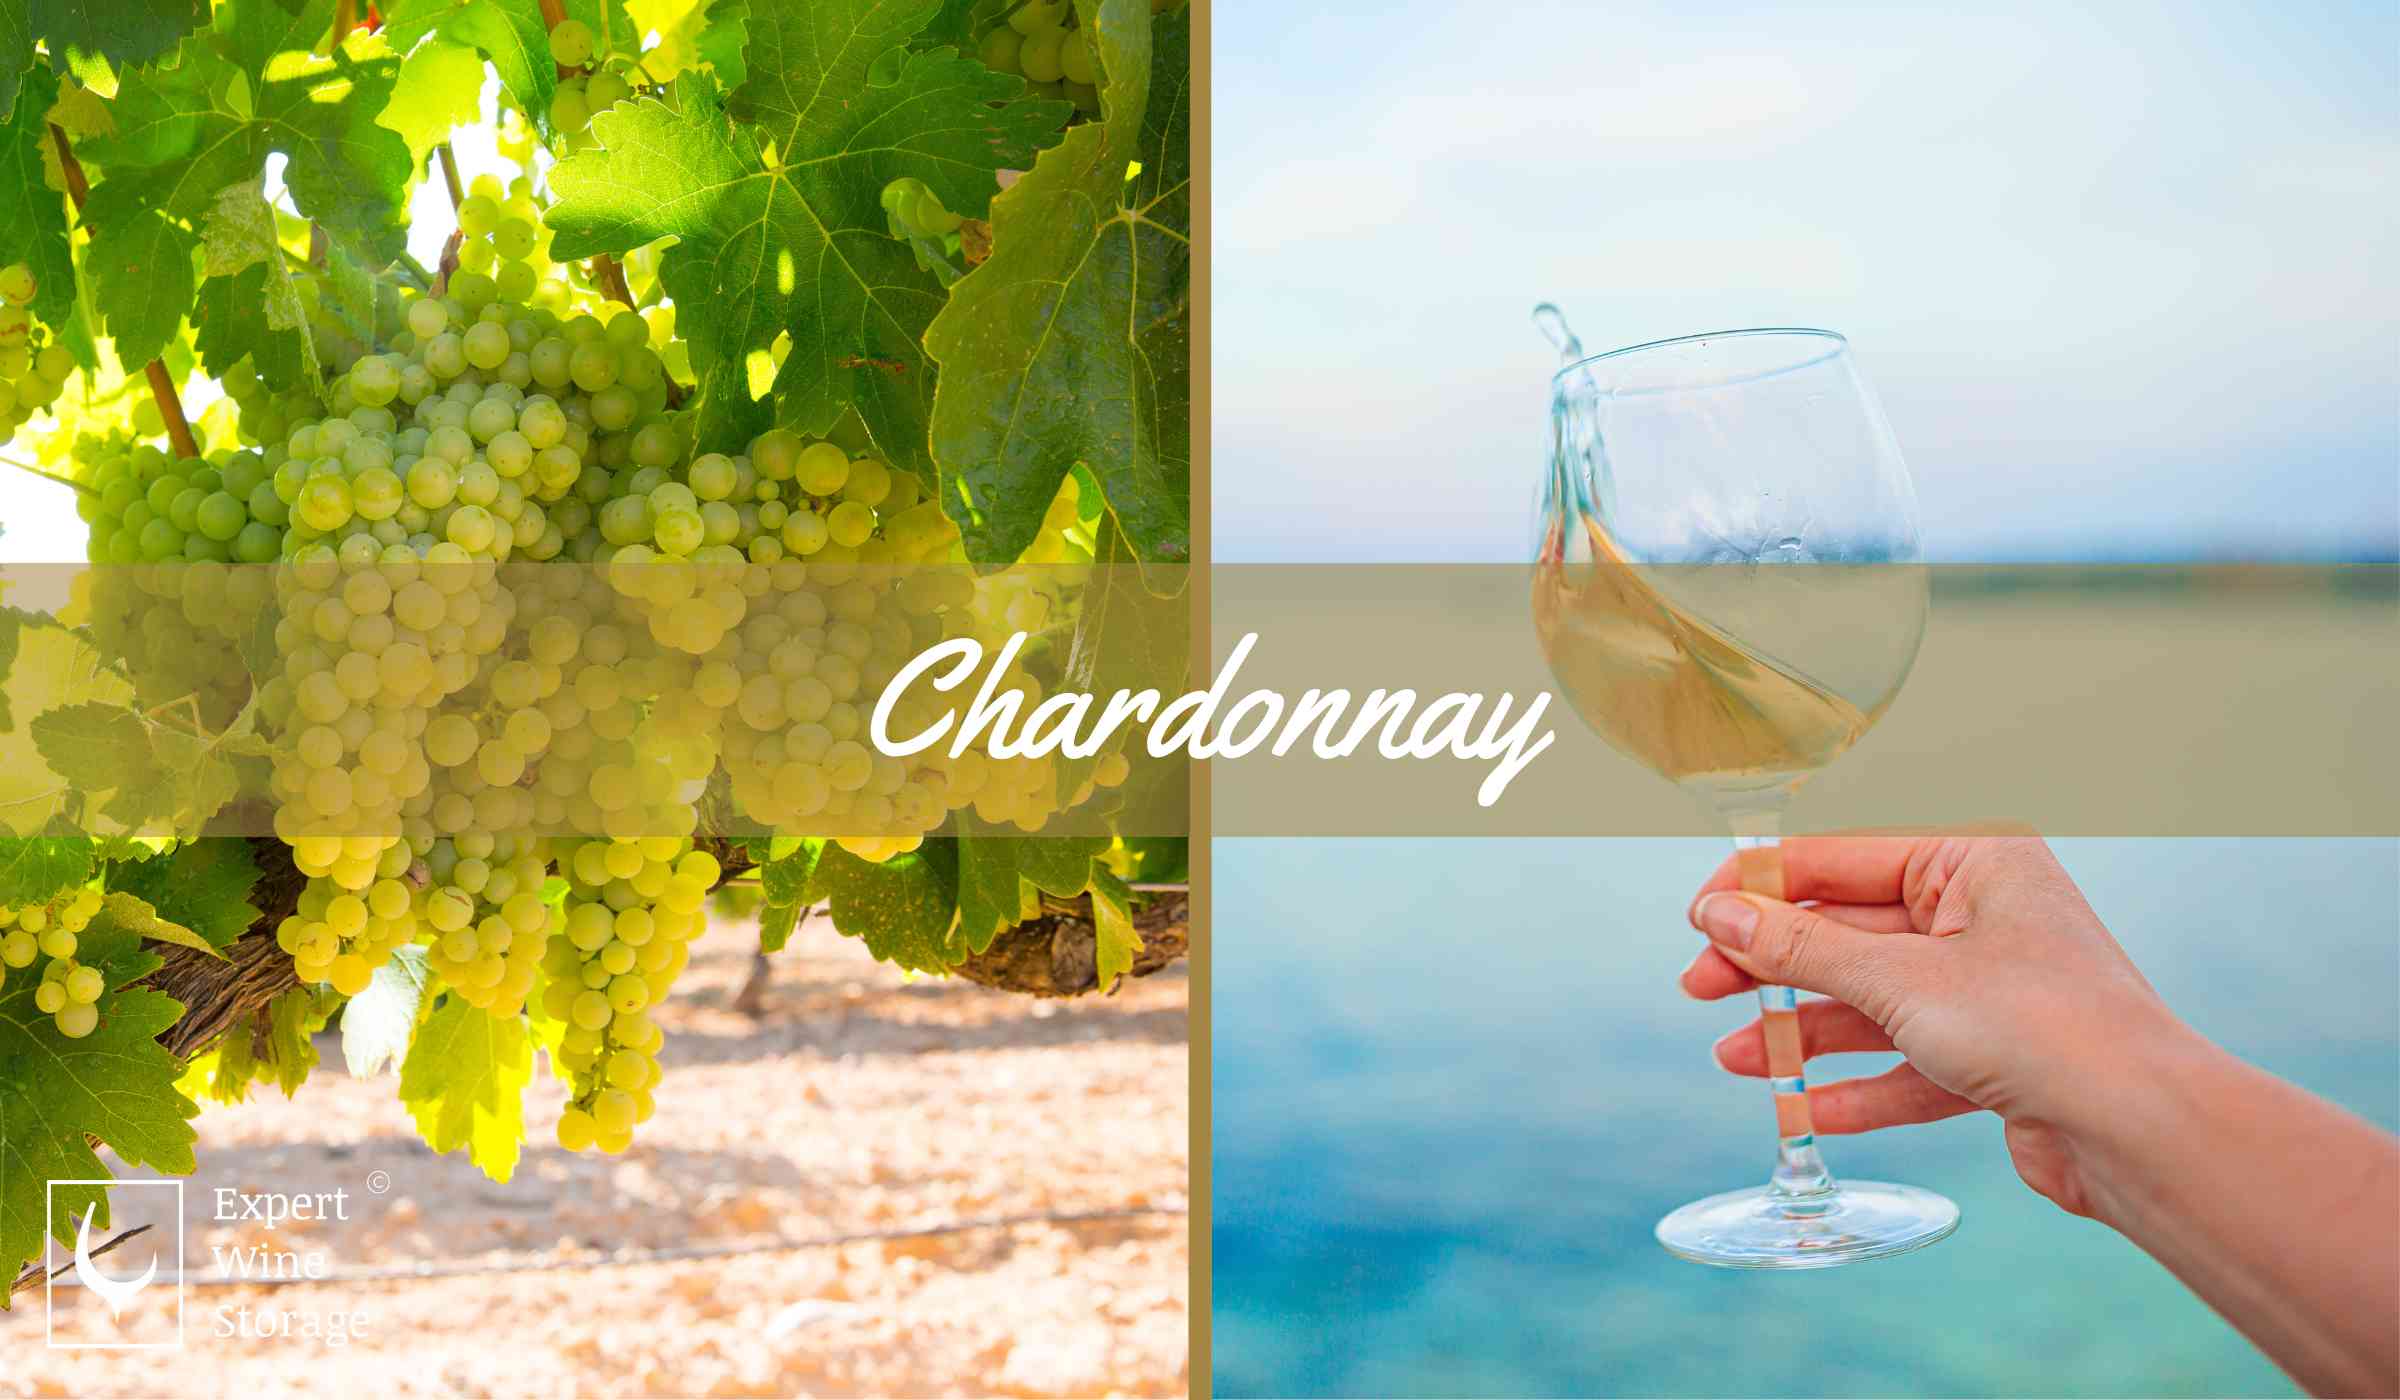 Chardonnay Wines